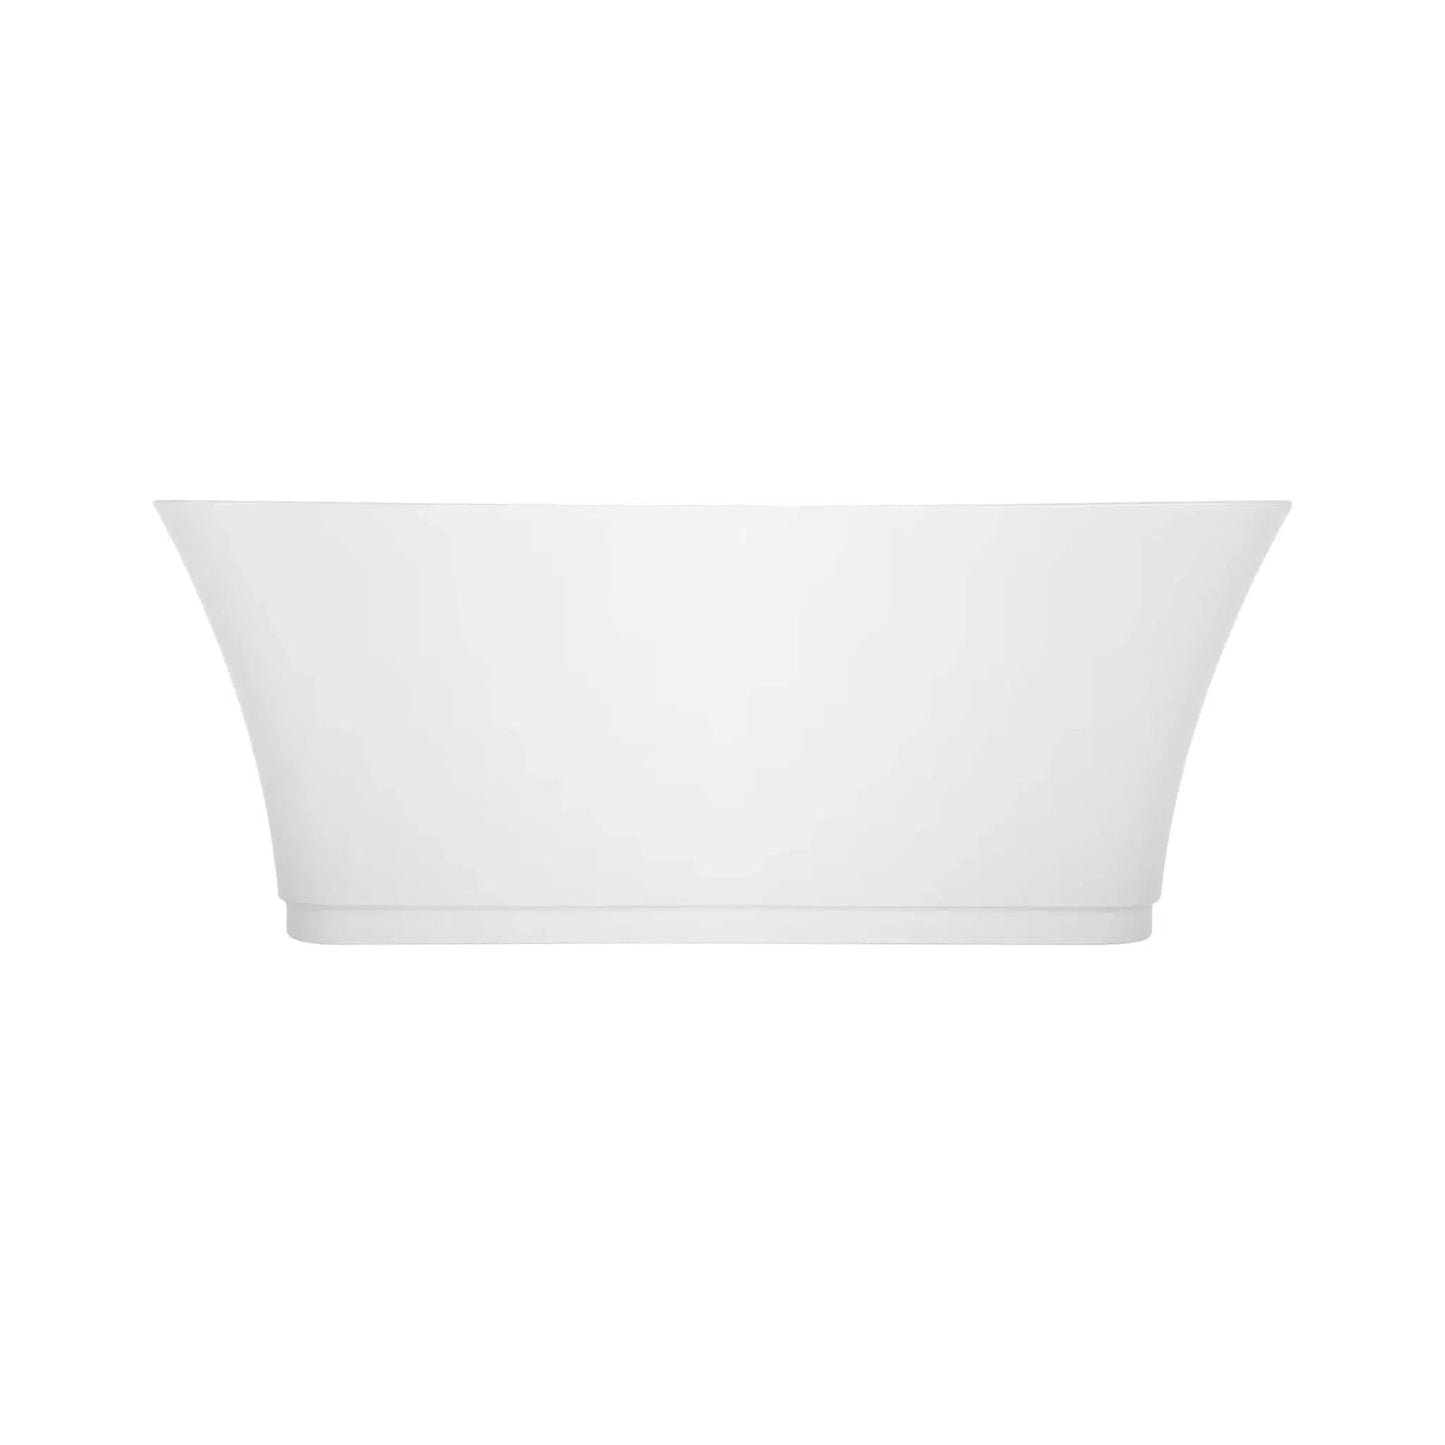 Empava 59" Glossy White Freestanding Rectangular Soaking Bathtub With Center Drain